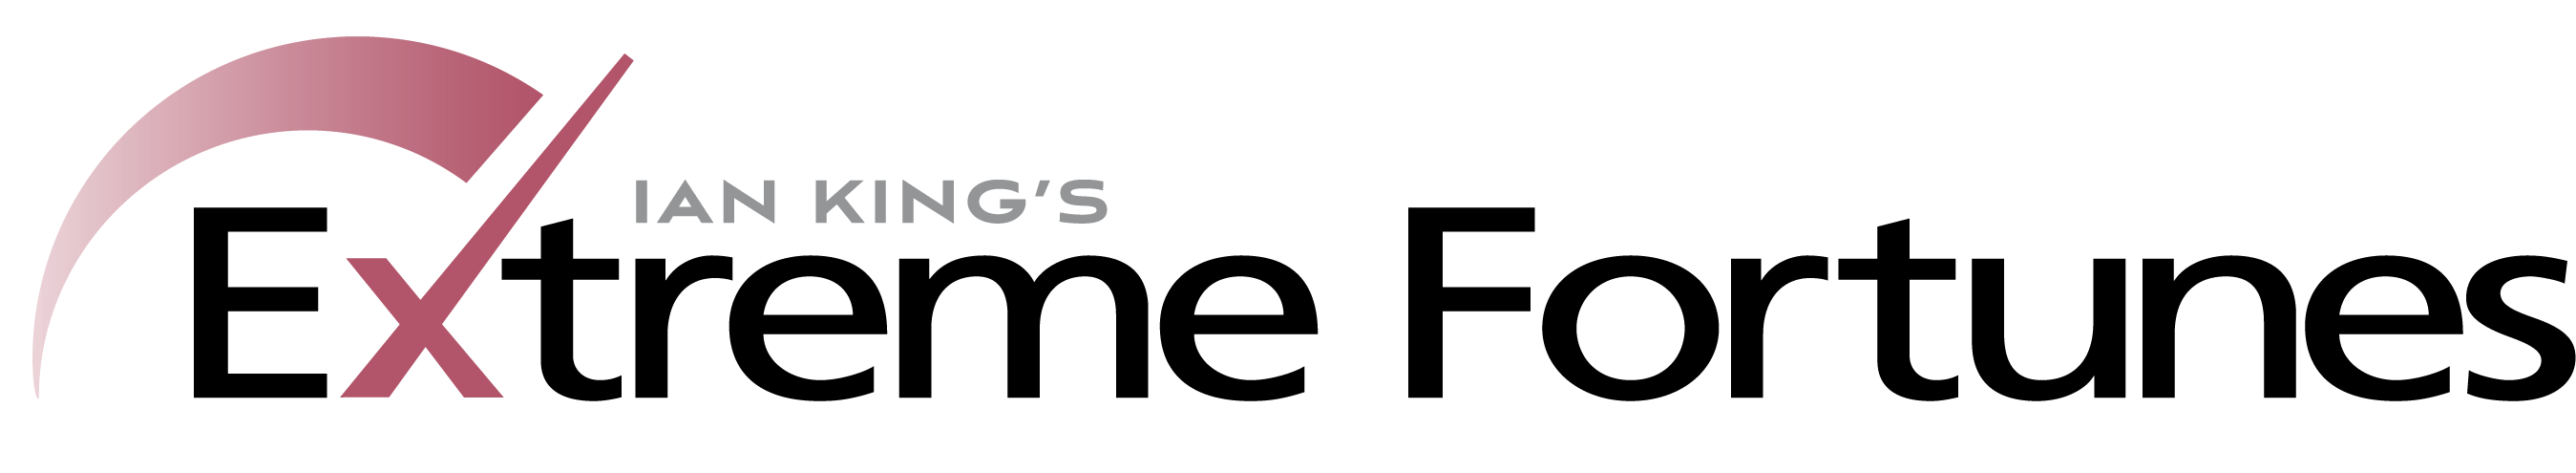 ExtremeFortunes_Logo_350